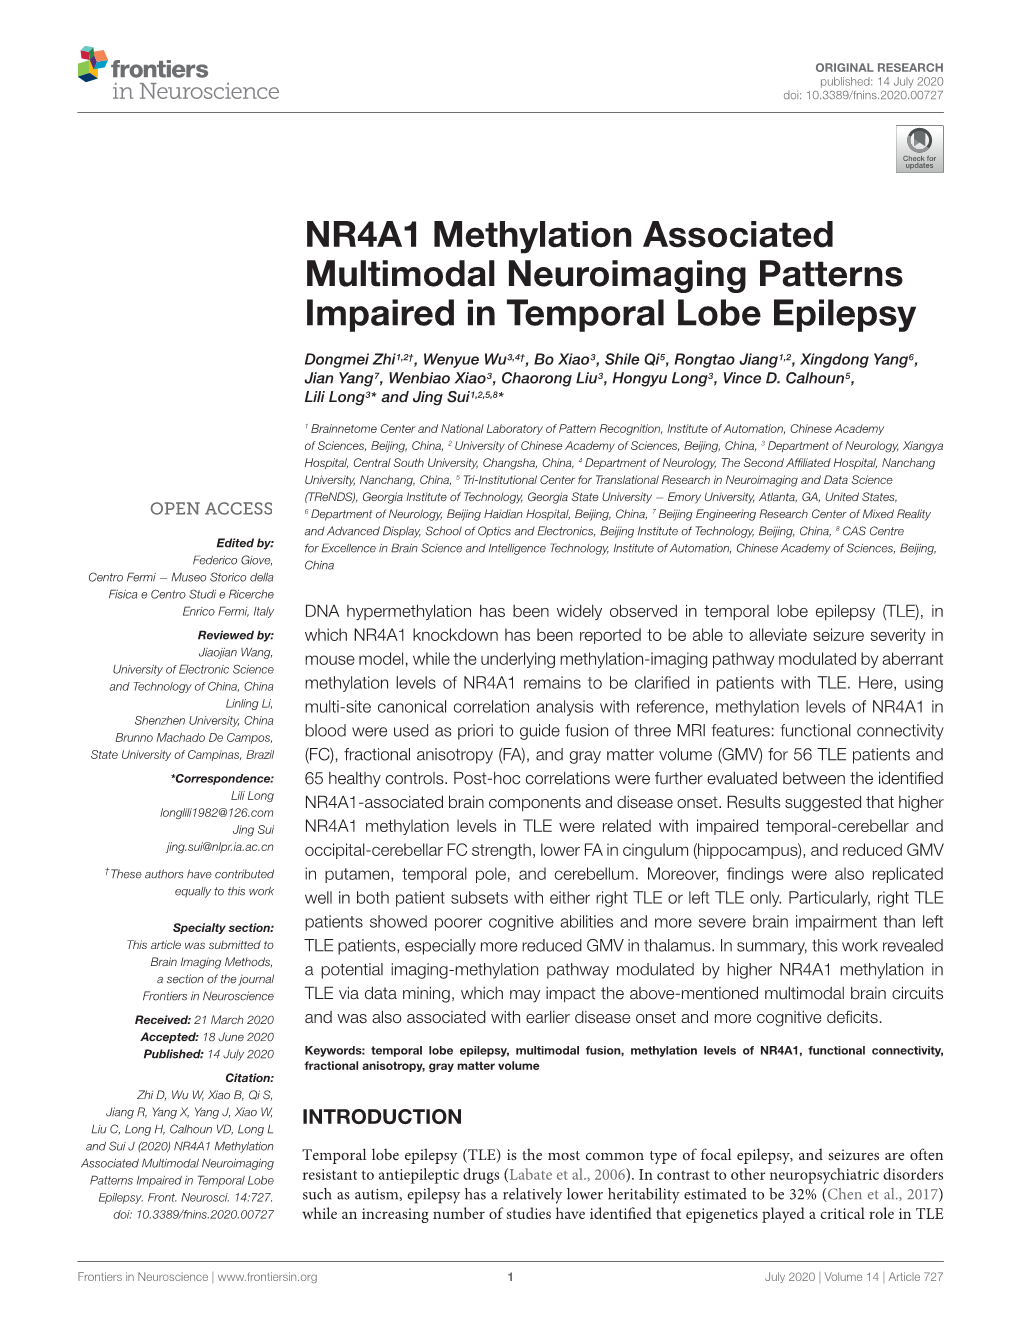 NR4A1 Methylation Associated Multimodal Neuroimaging Patterns Impaired in Temporal Lobe Epilepsy